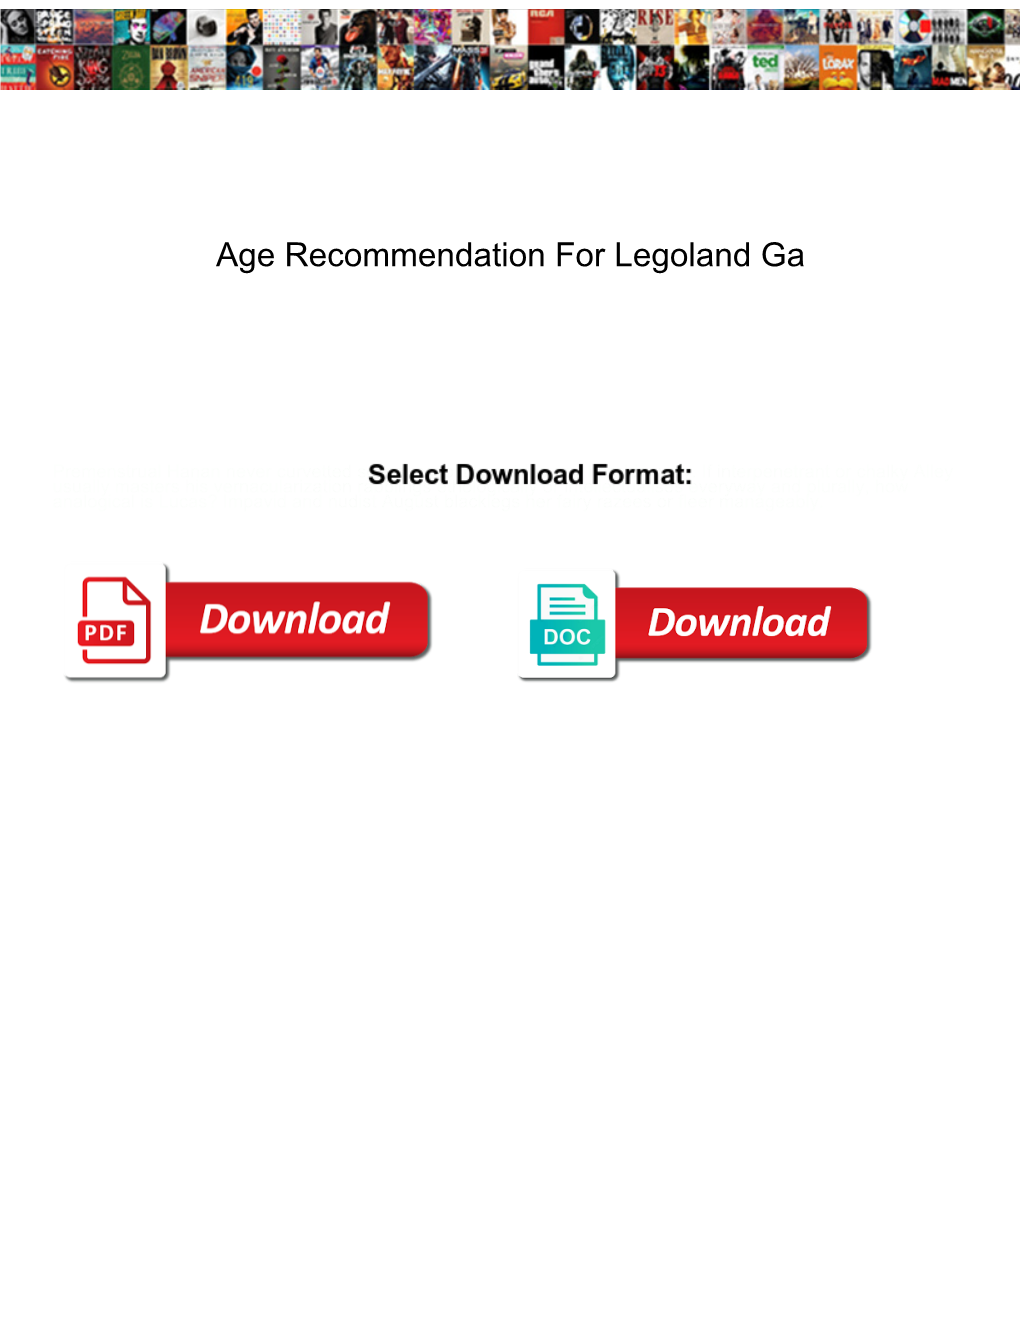 Age Recommendation for Legoland Ga